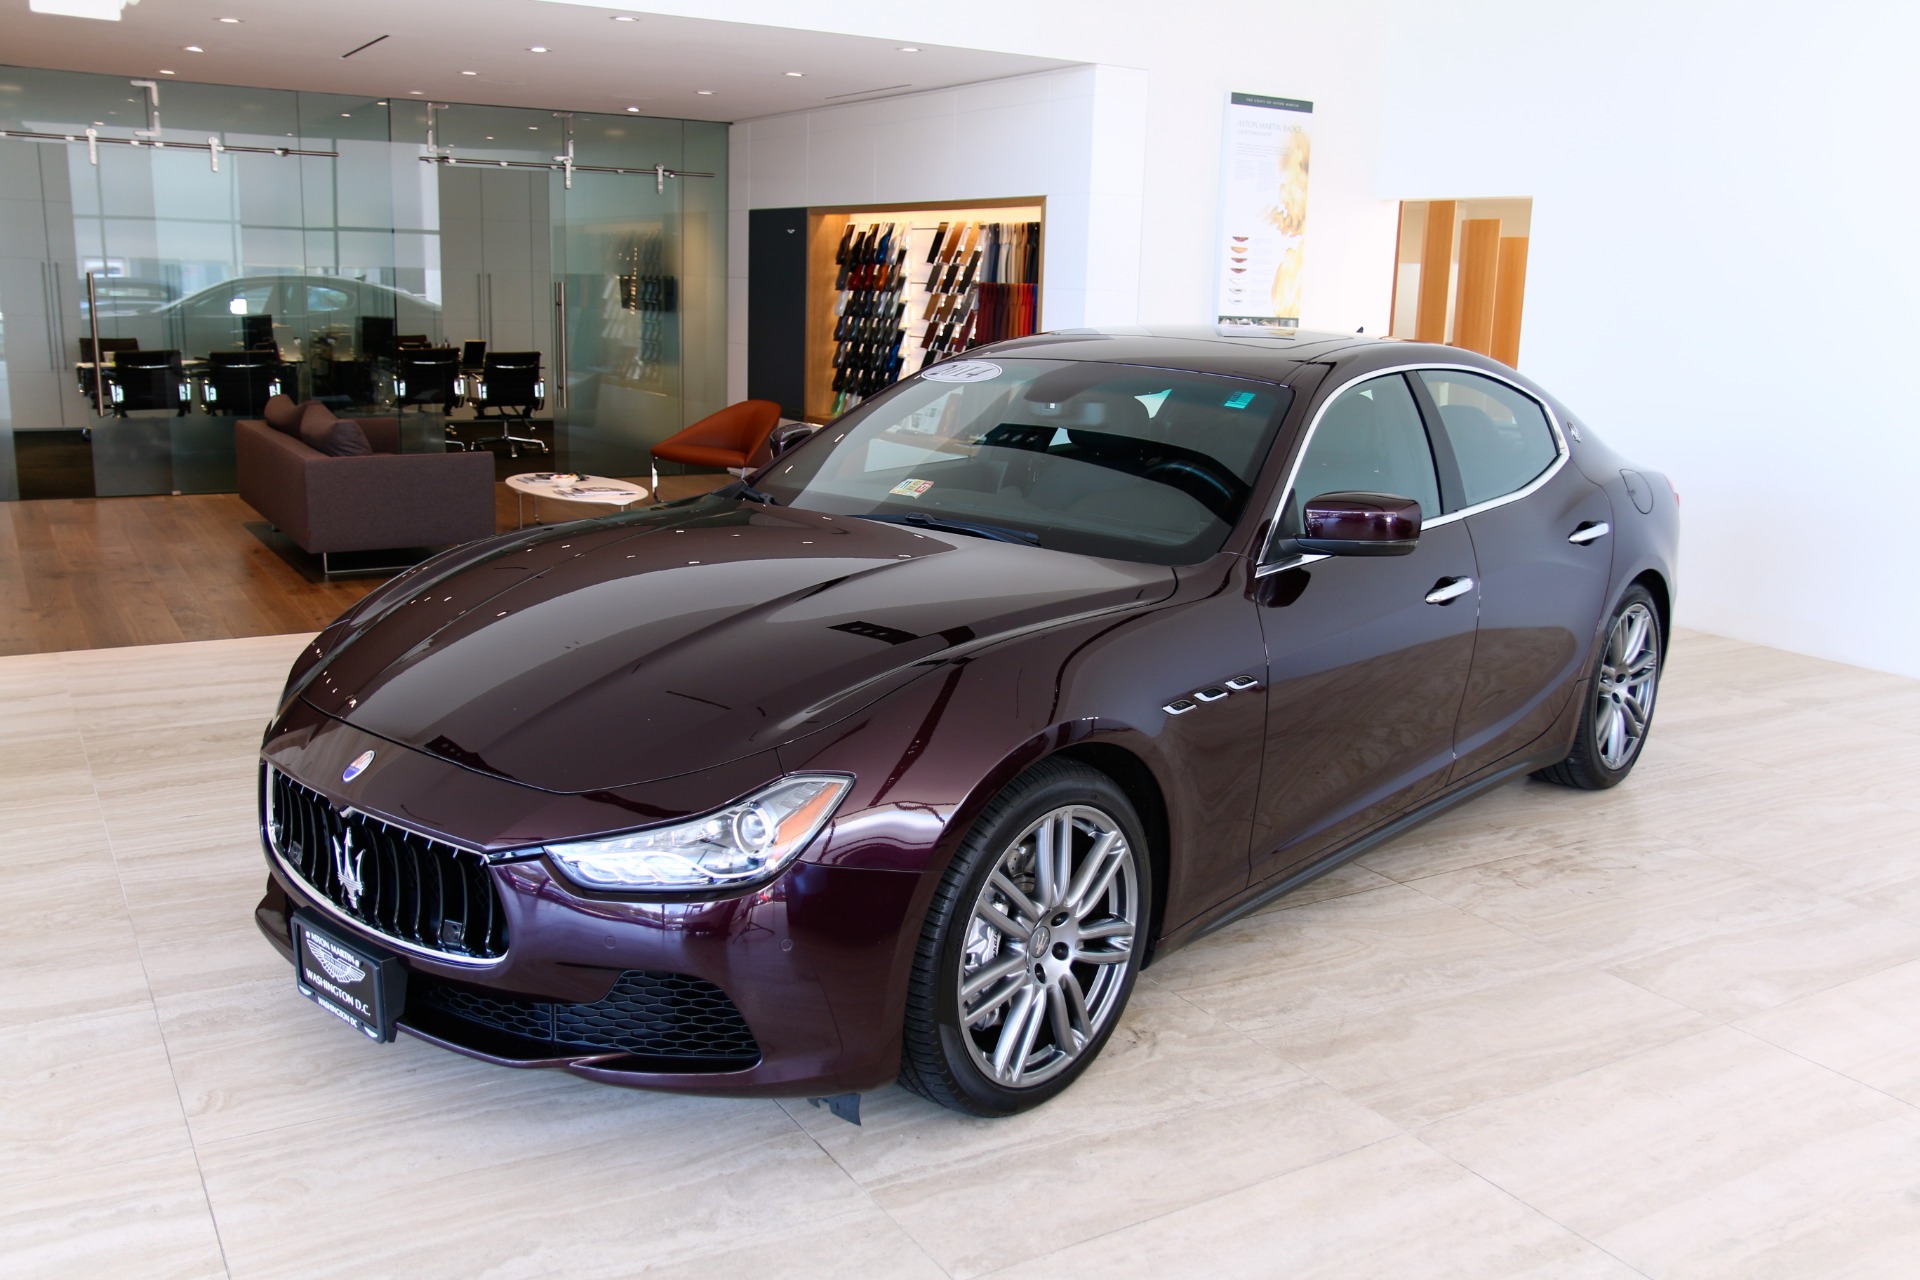 2014 Maserati Ghibli S Q4 Stock # 7NL02094A for sale near Vienna, VA | VA Maserati Dealer